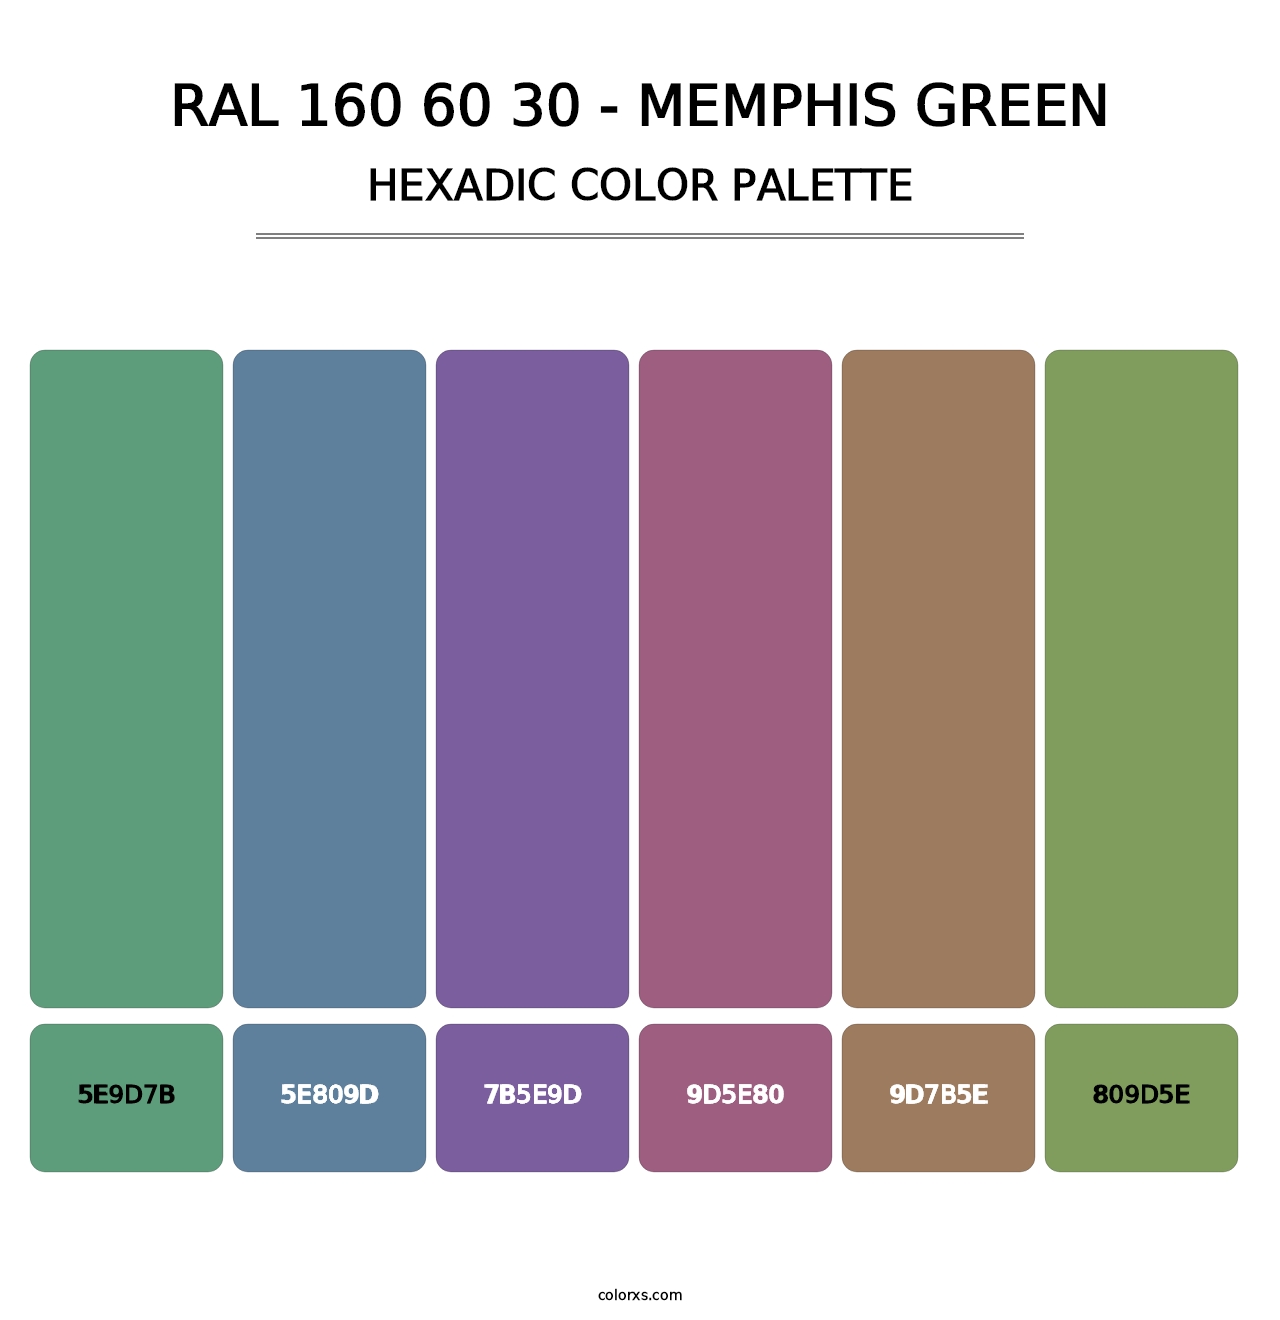 RAL 160 60 30 - Memphis Green - Hexadic Color Palette